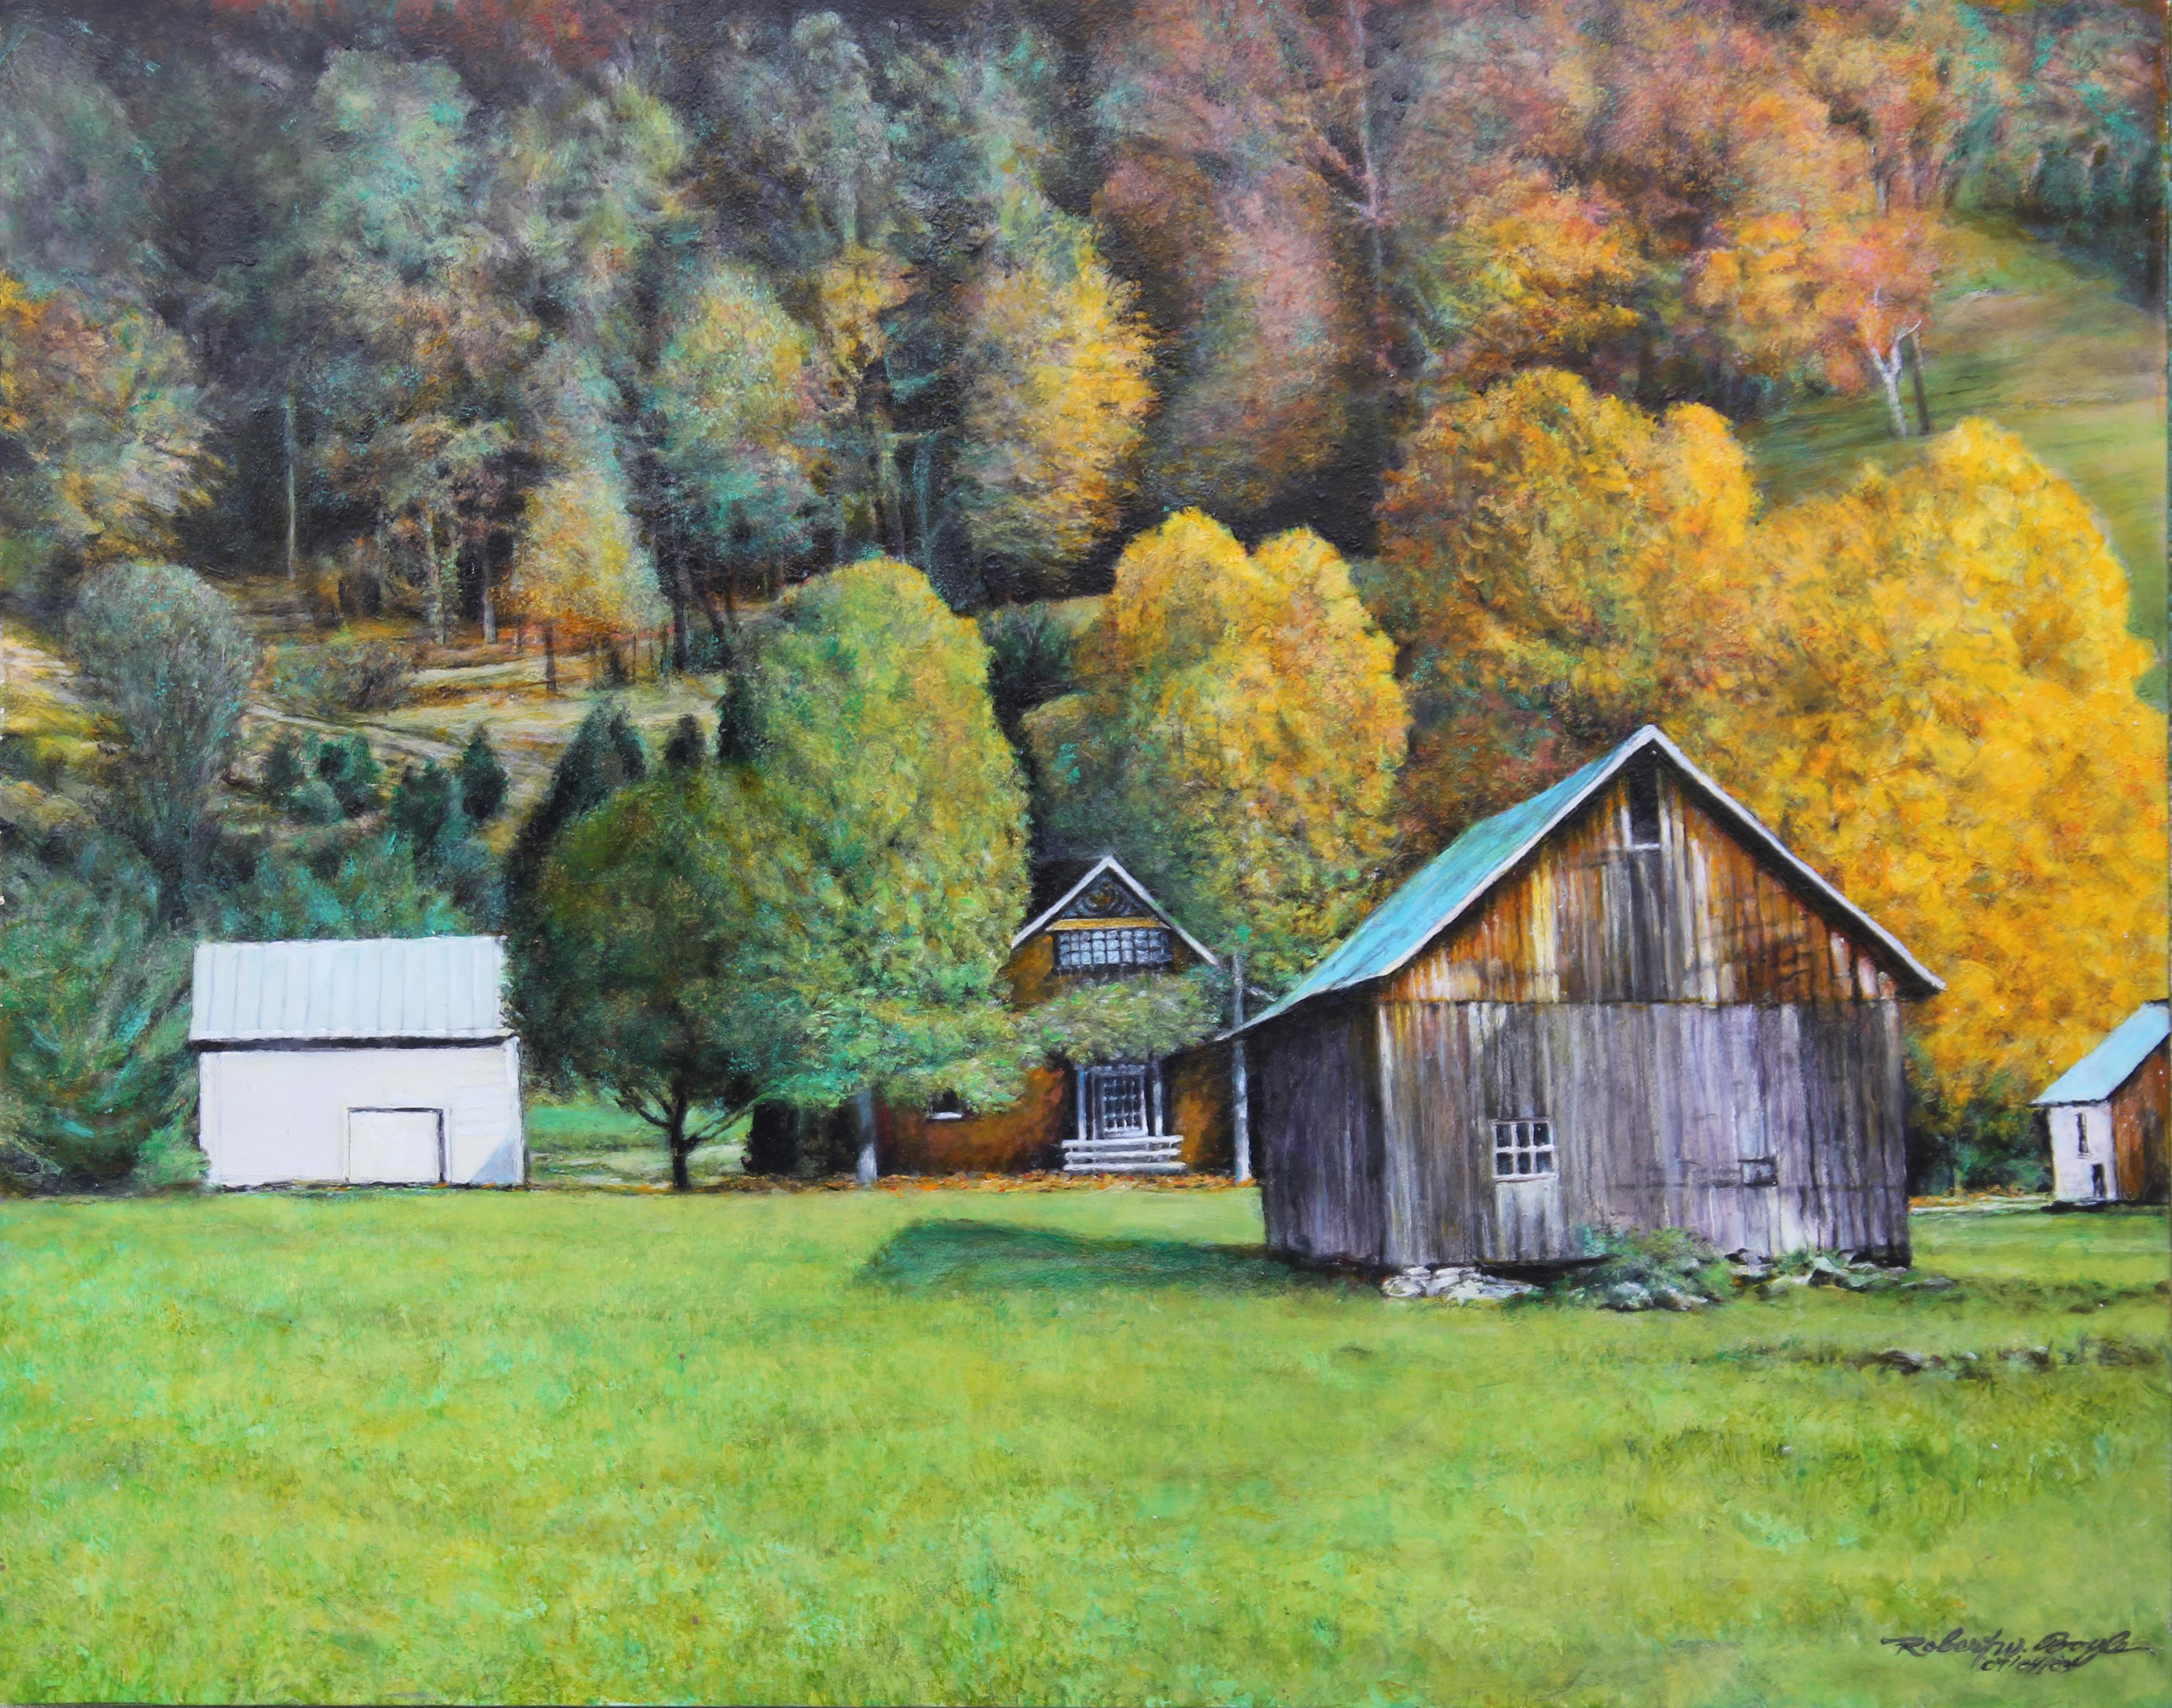 Robert W. Boyle Landscape Painting - Autumn Naturalistic Landscape with a Cabin